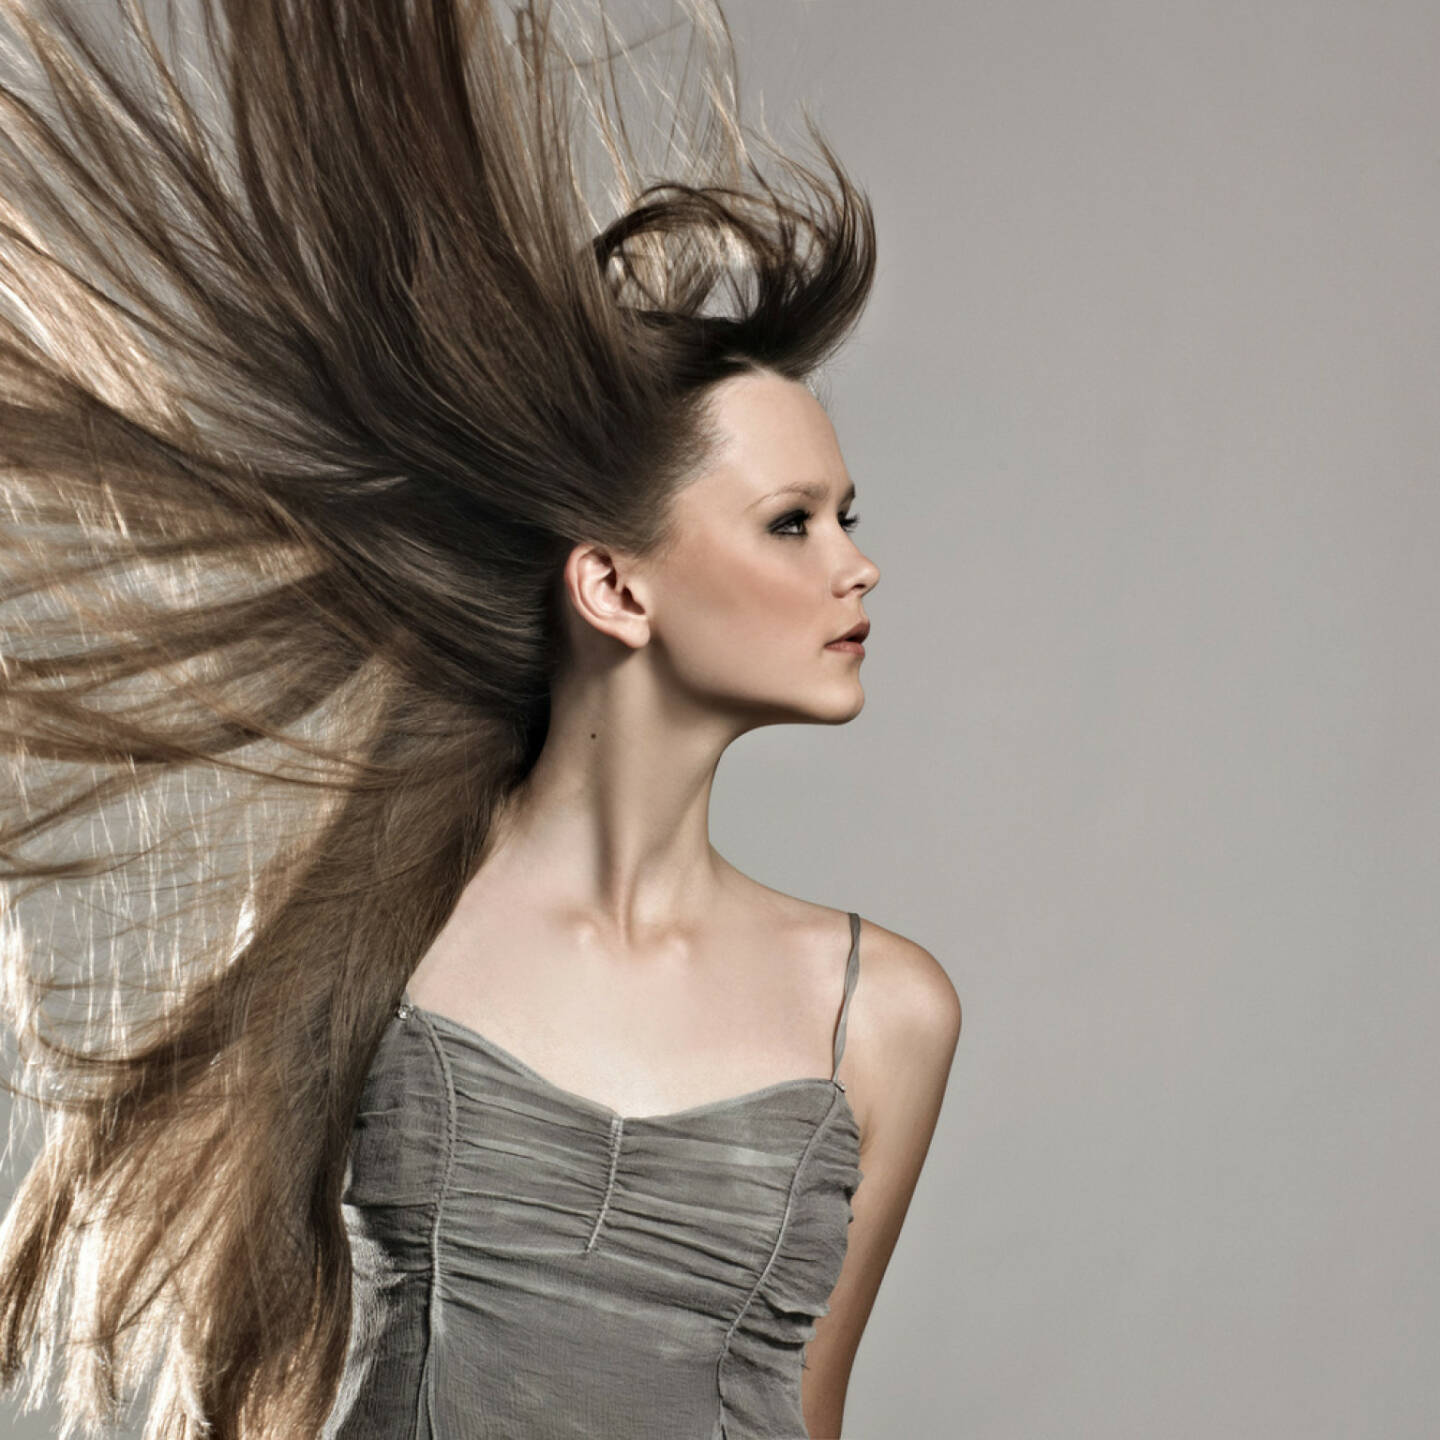 Gegenwind, Wind, Haare, stürmisch, turbulent, http://www.shutterstock.com/de/pic-81639385/stock-photo-photo-of-beautiful-woman-with-magnificent-hair.html 